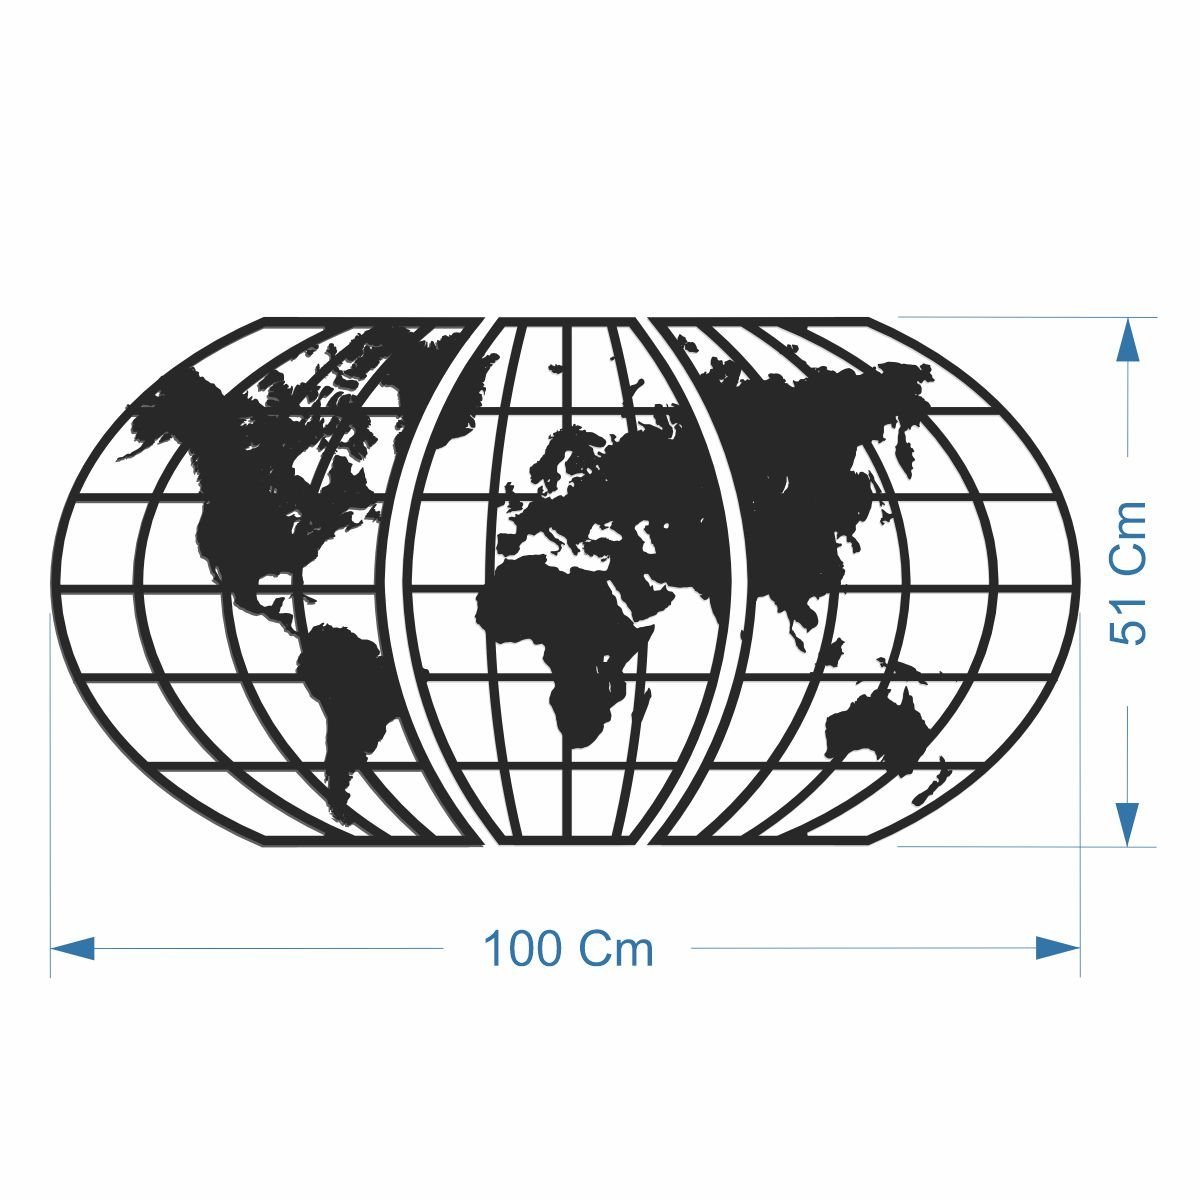 Quadro Decoração Vazado Mapa Mundi World Triplo Branc 100x51 - 4